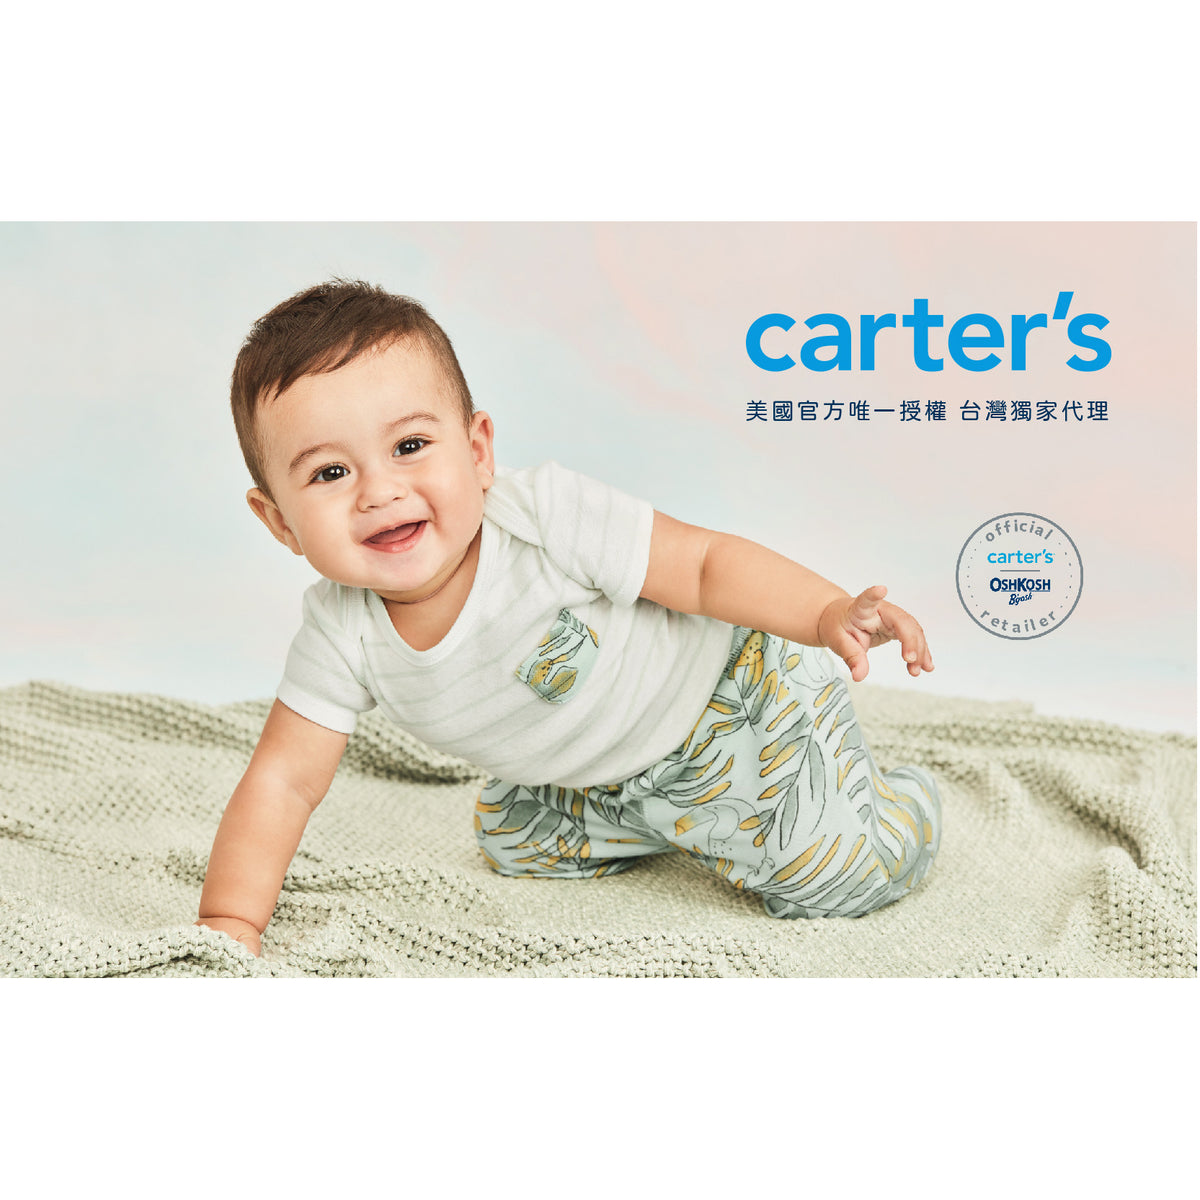 Carter's 南瓜風條紋2件組套裝(6M-24M)